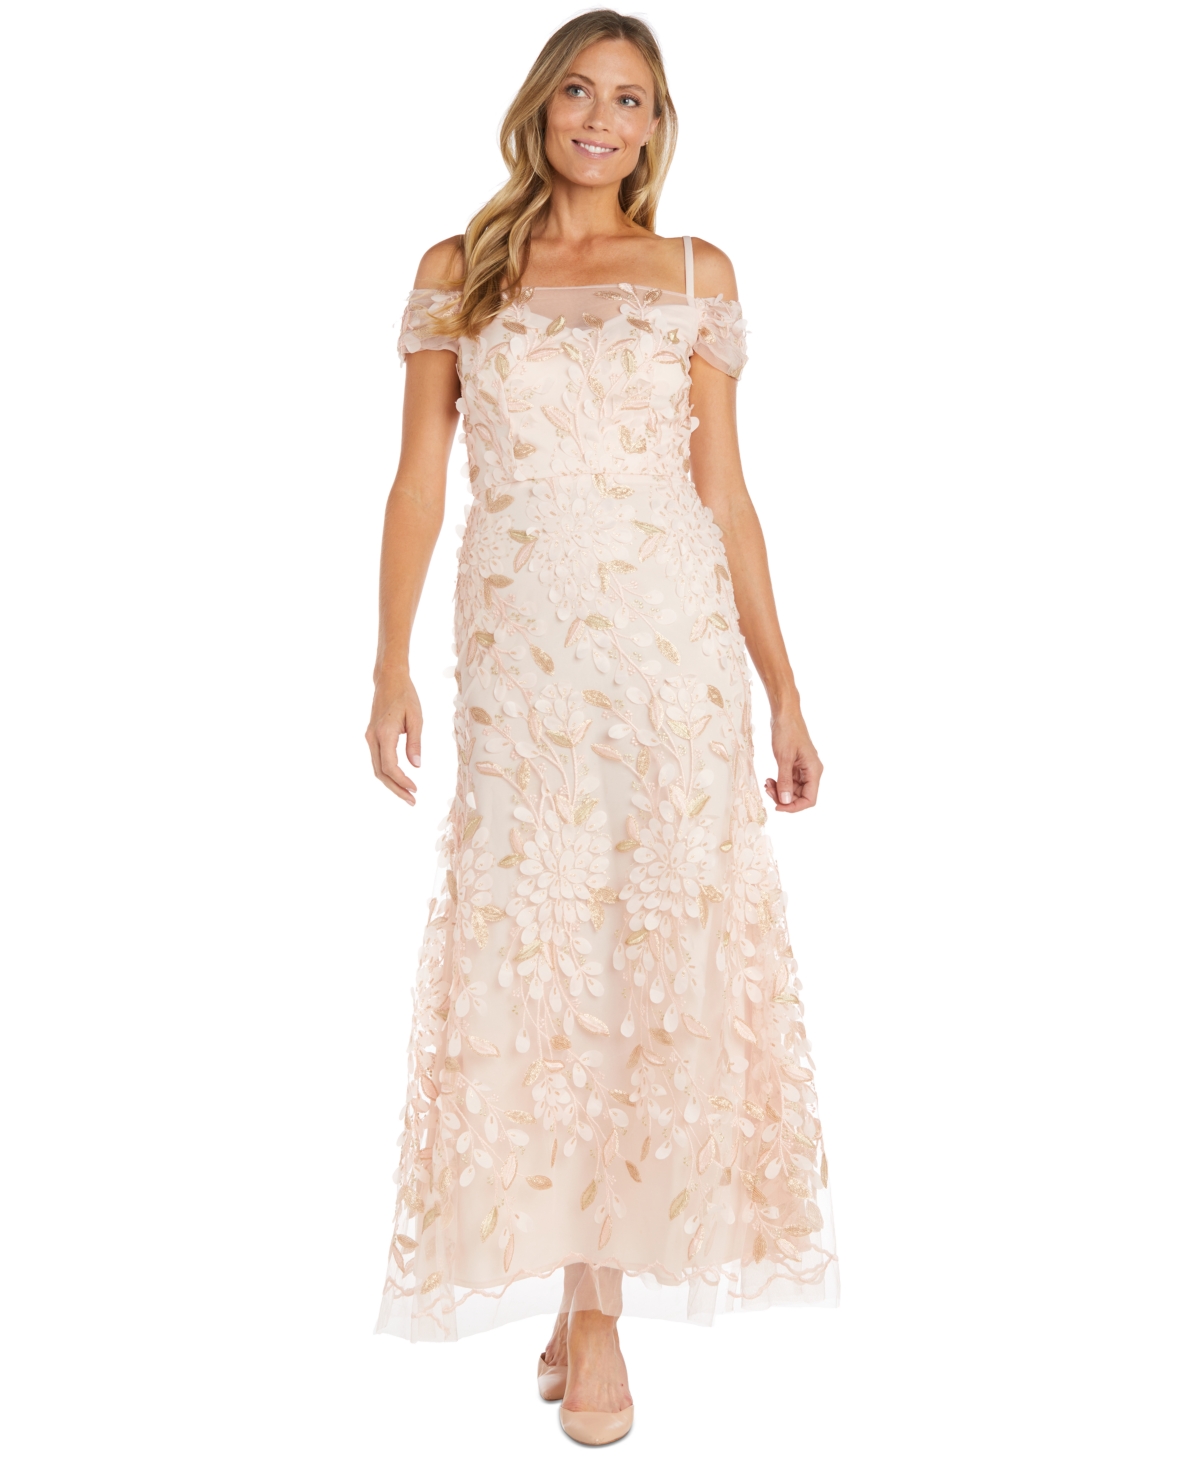 Women's Embellished 3D Appliqued Gown - Blush